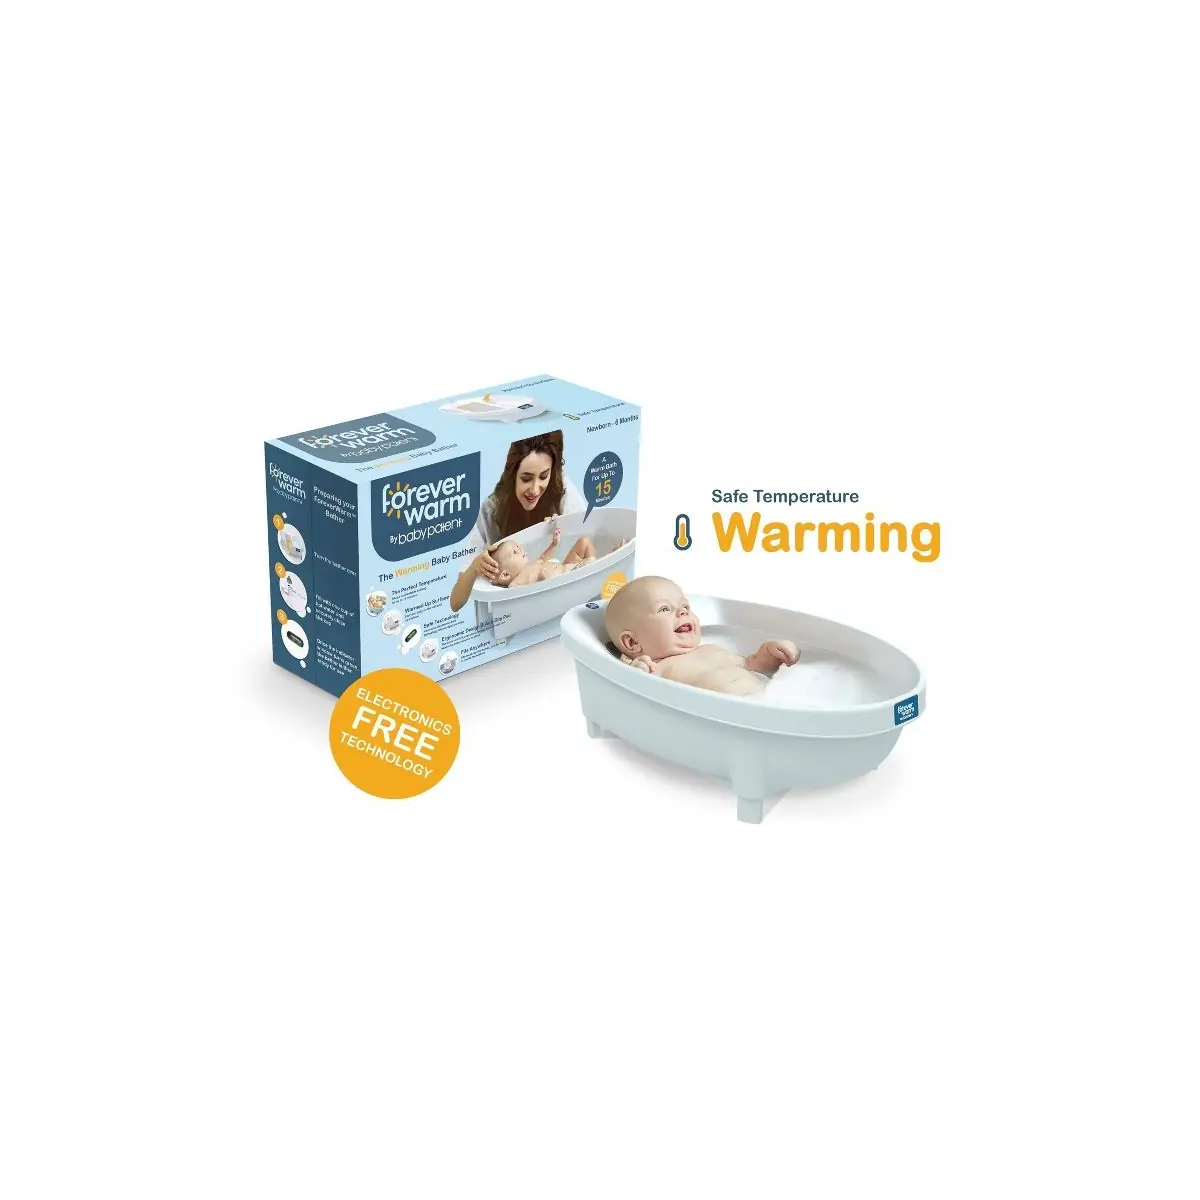 Image of Aqua Forever Warm Warming Baby Bathtub Bather-White